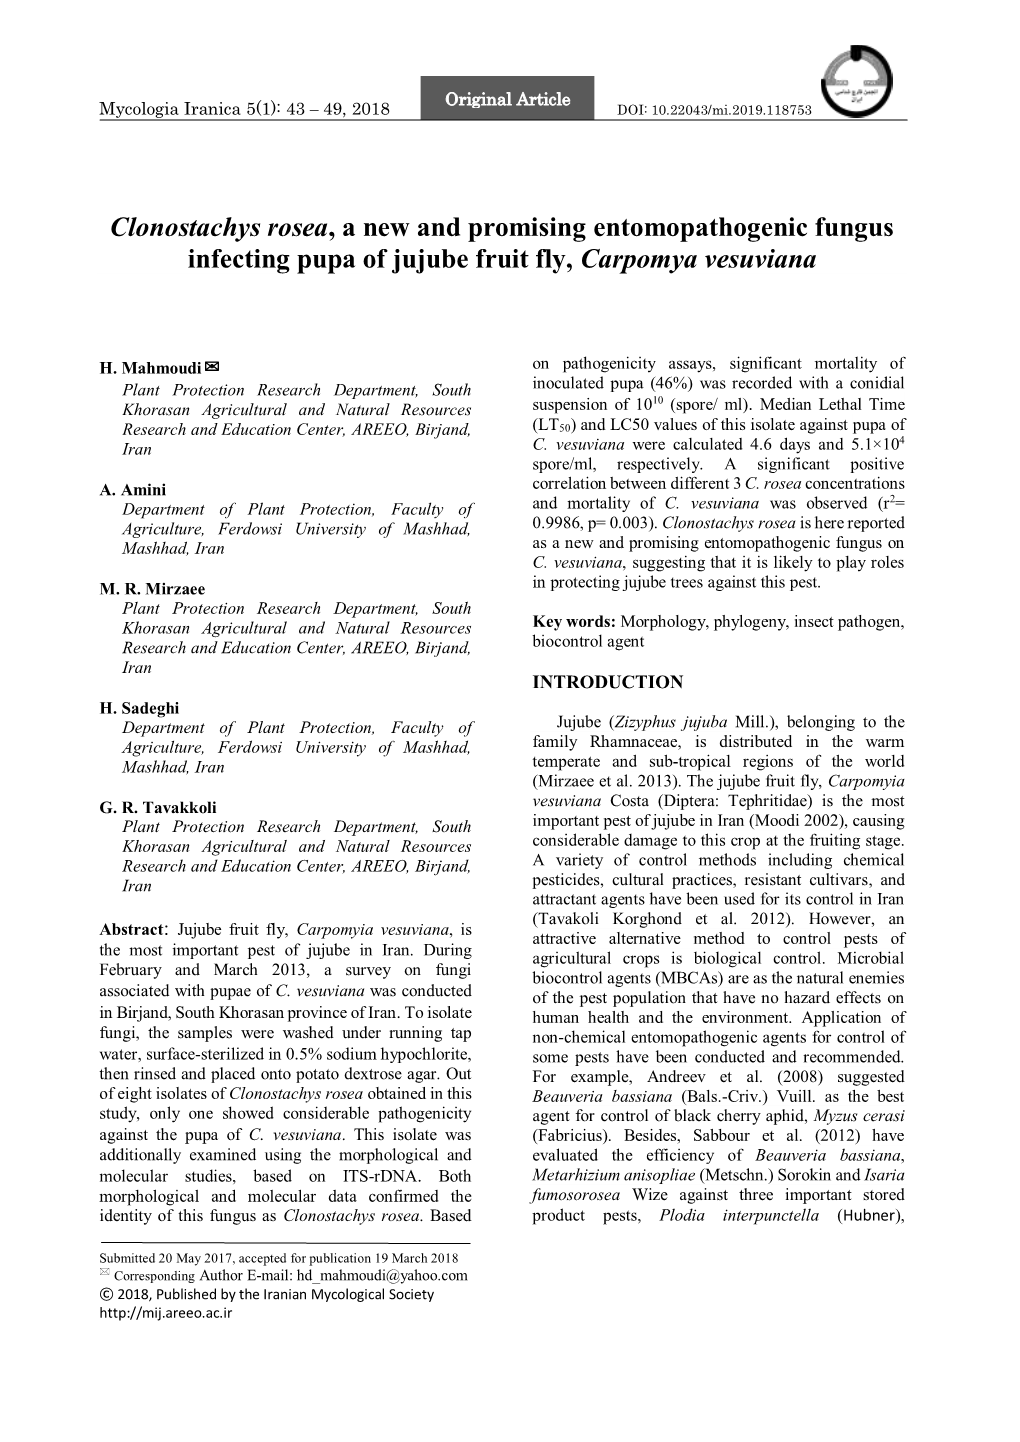 Clonostachys Rosea, a New and Promising Entomopathogenic Fungus Infecting Pupa of Jujube Fruit Fly, Carpomya Vesuviana